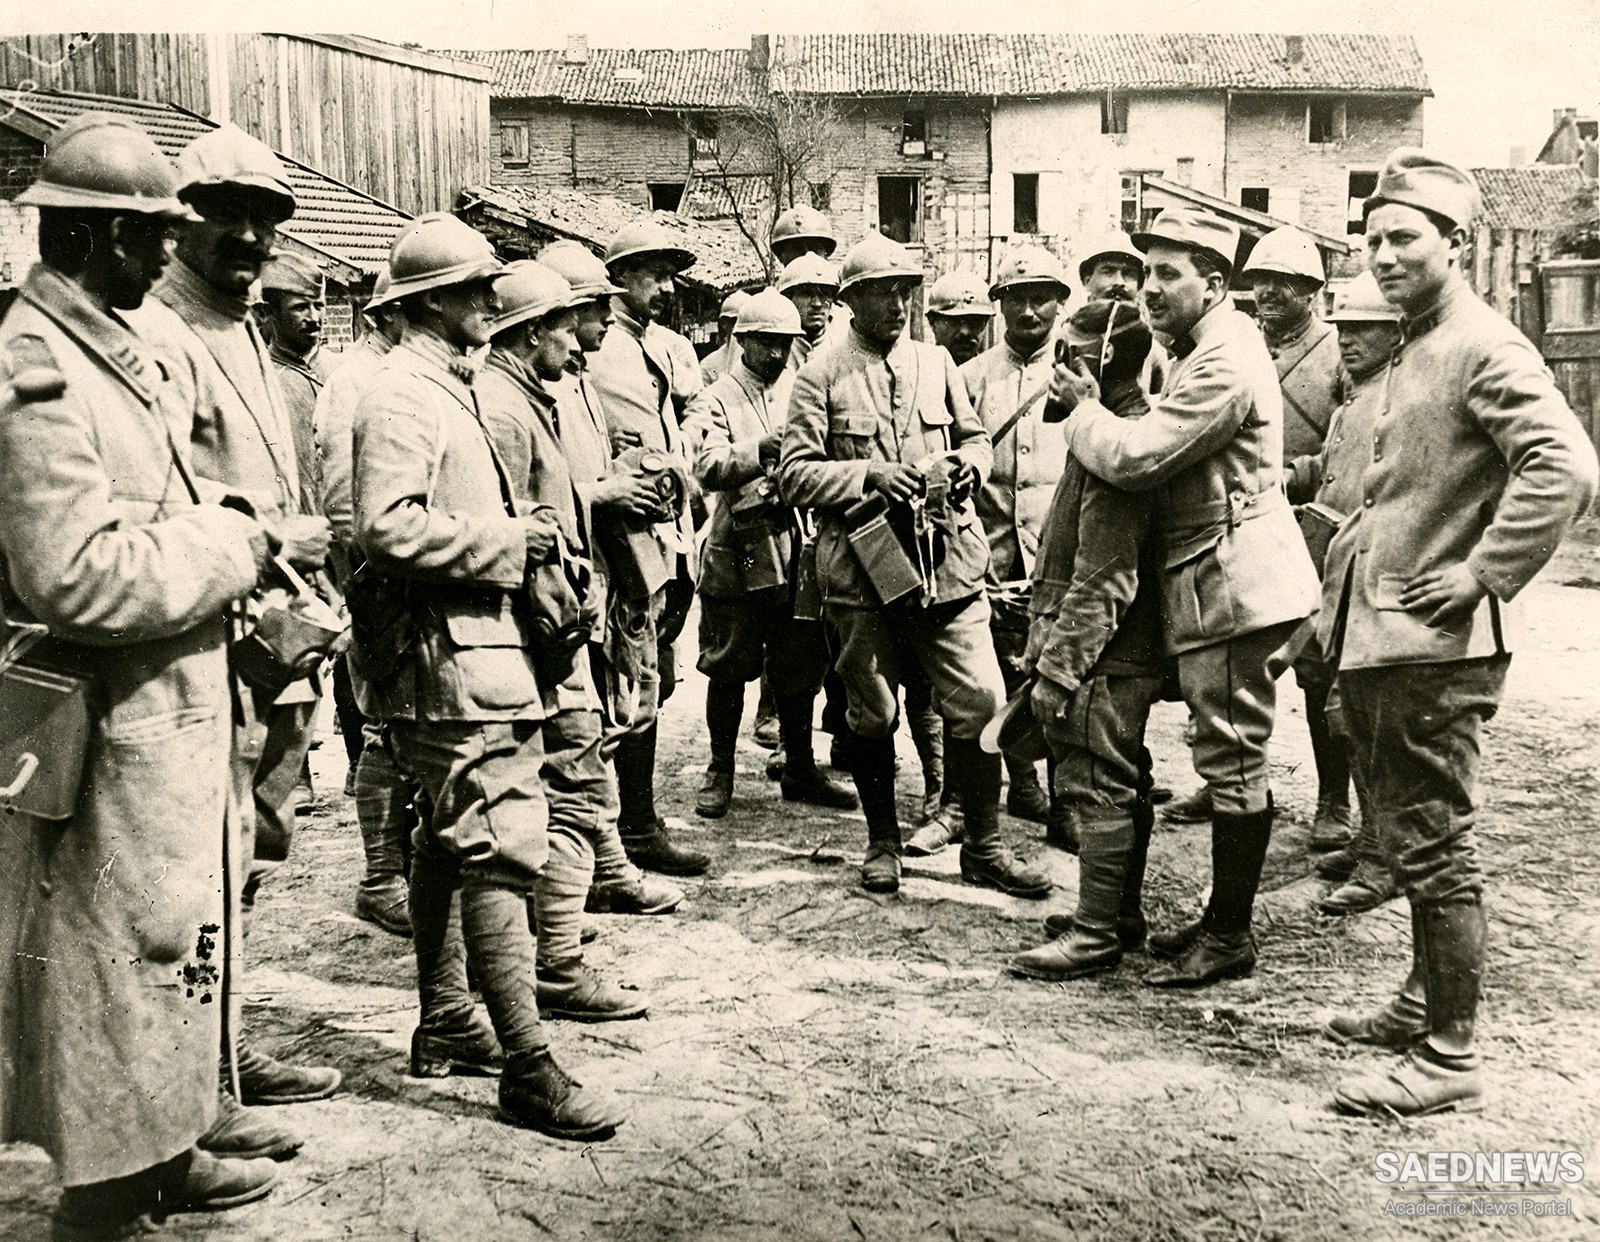 1916: the War of Attrition